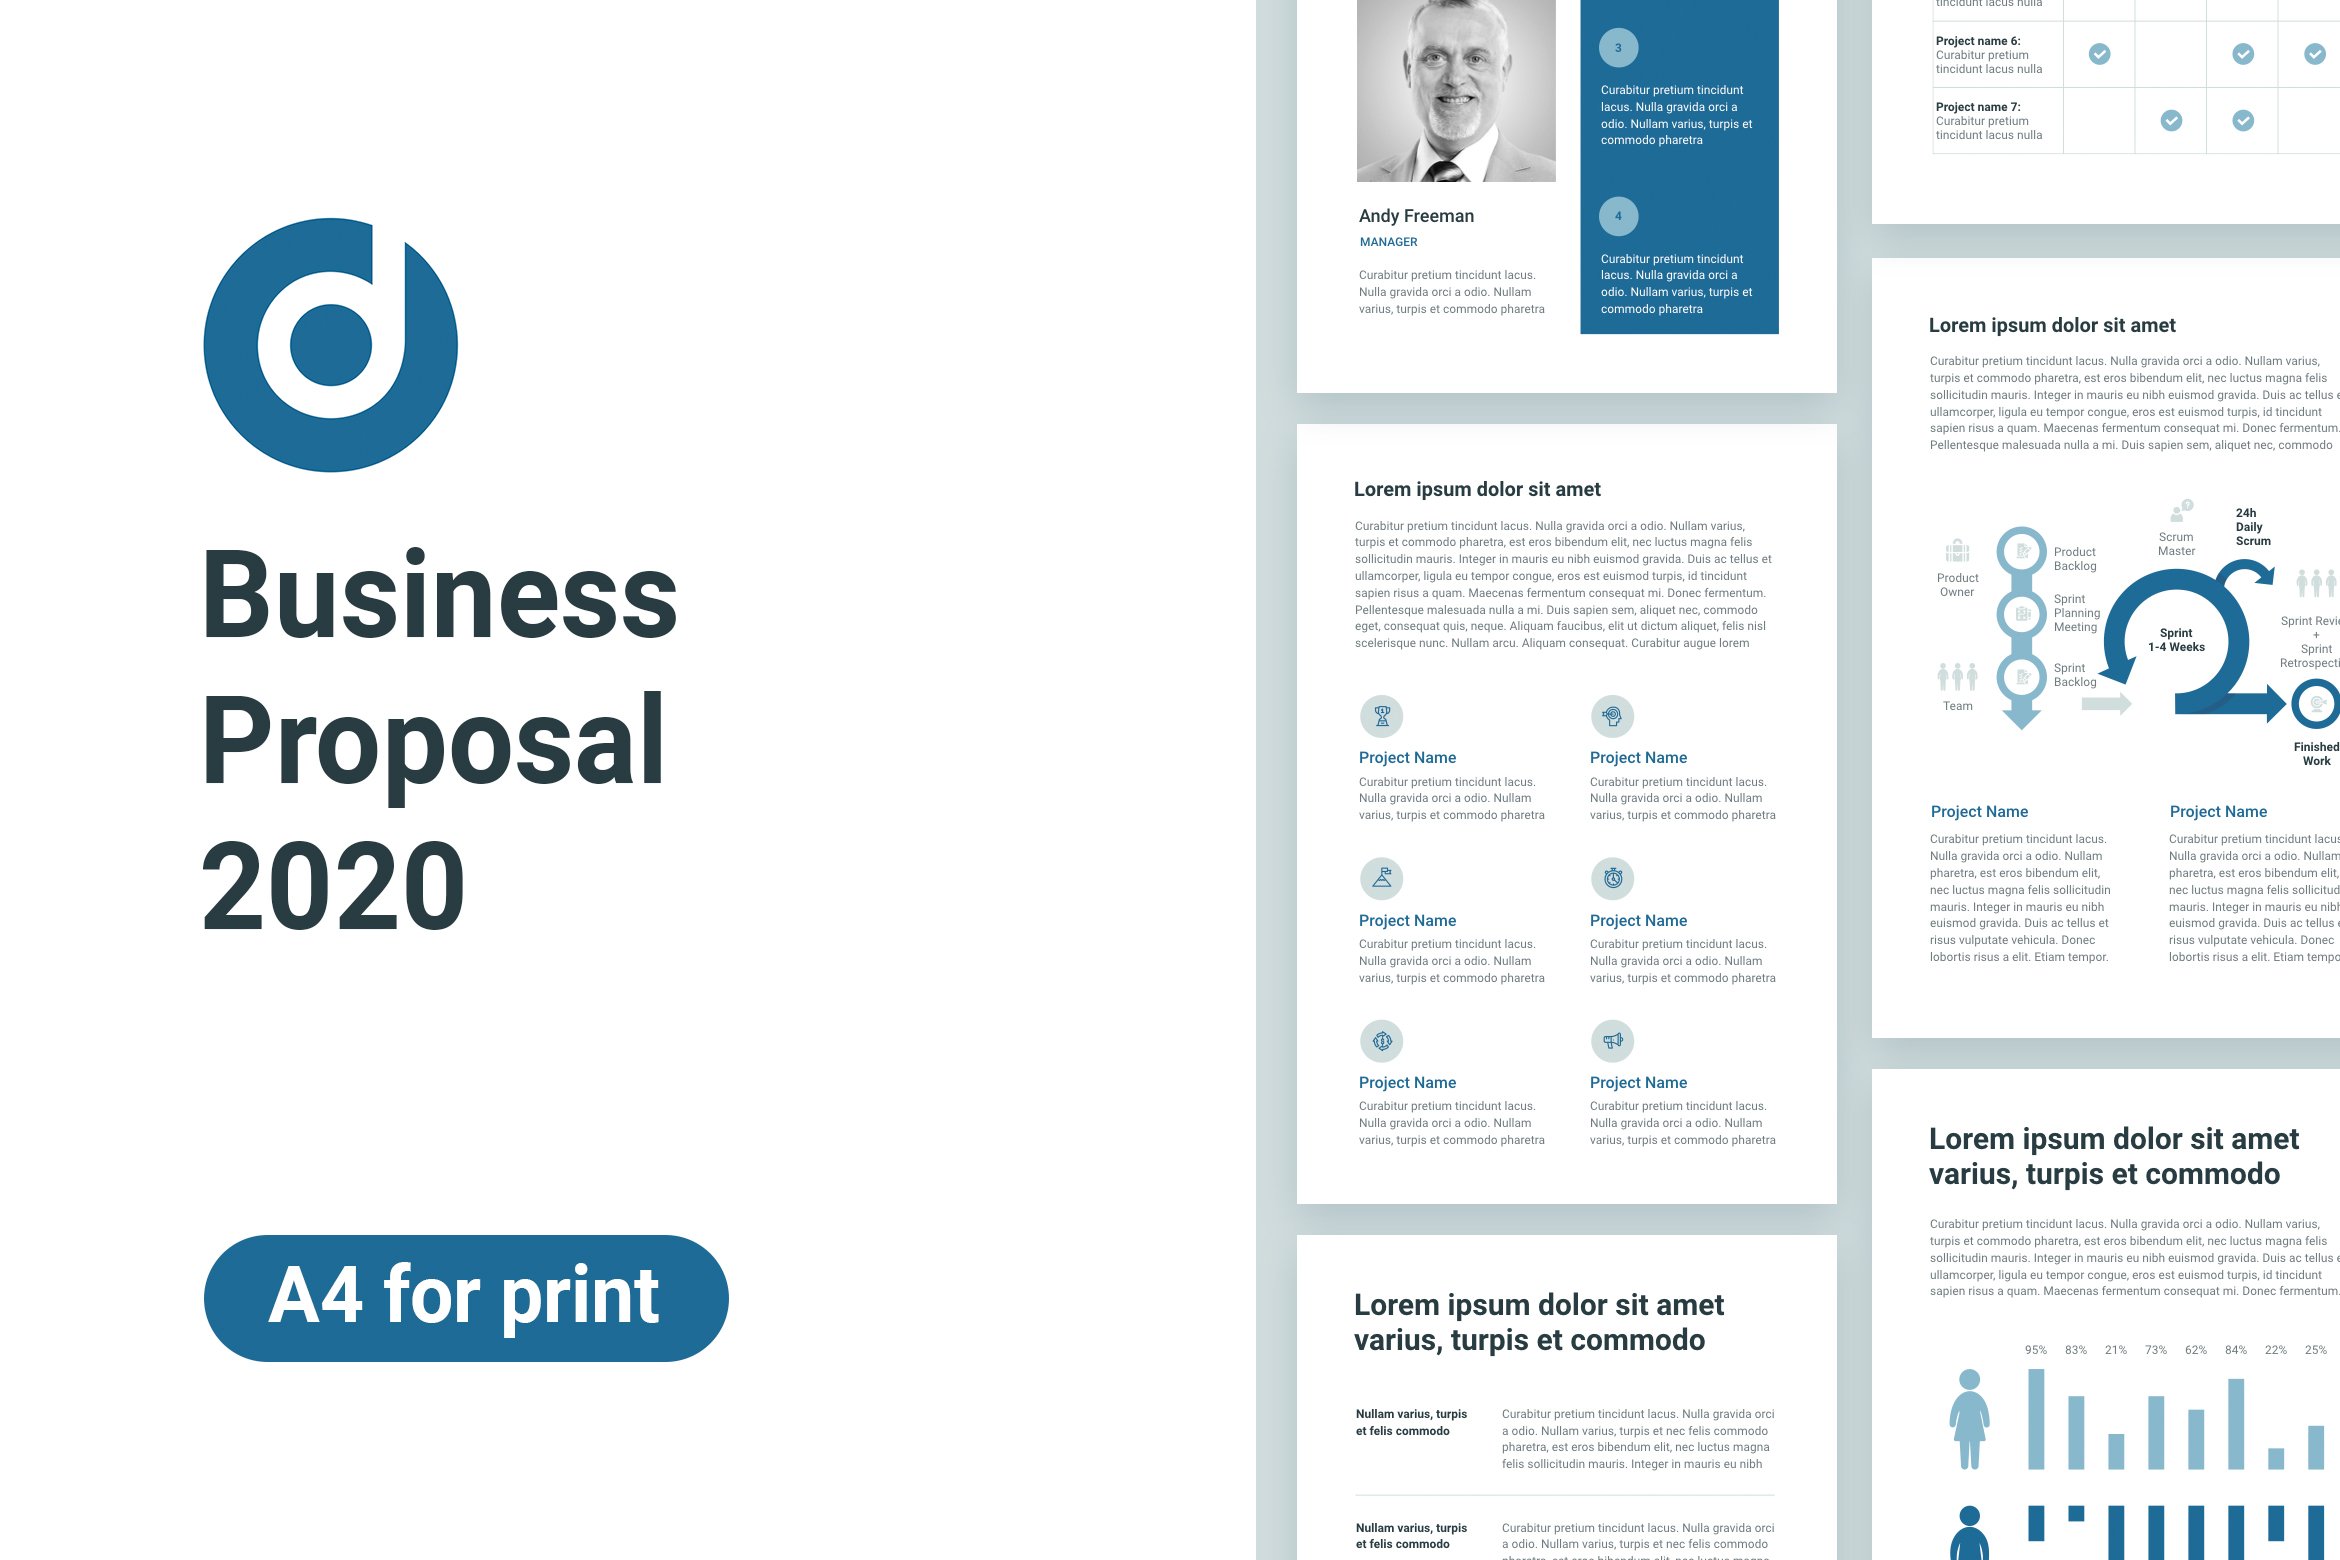 Business Proposal A4 Google Slides cover image.